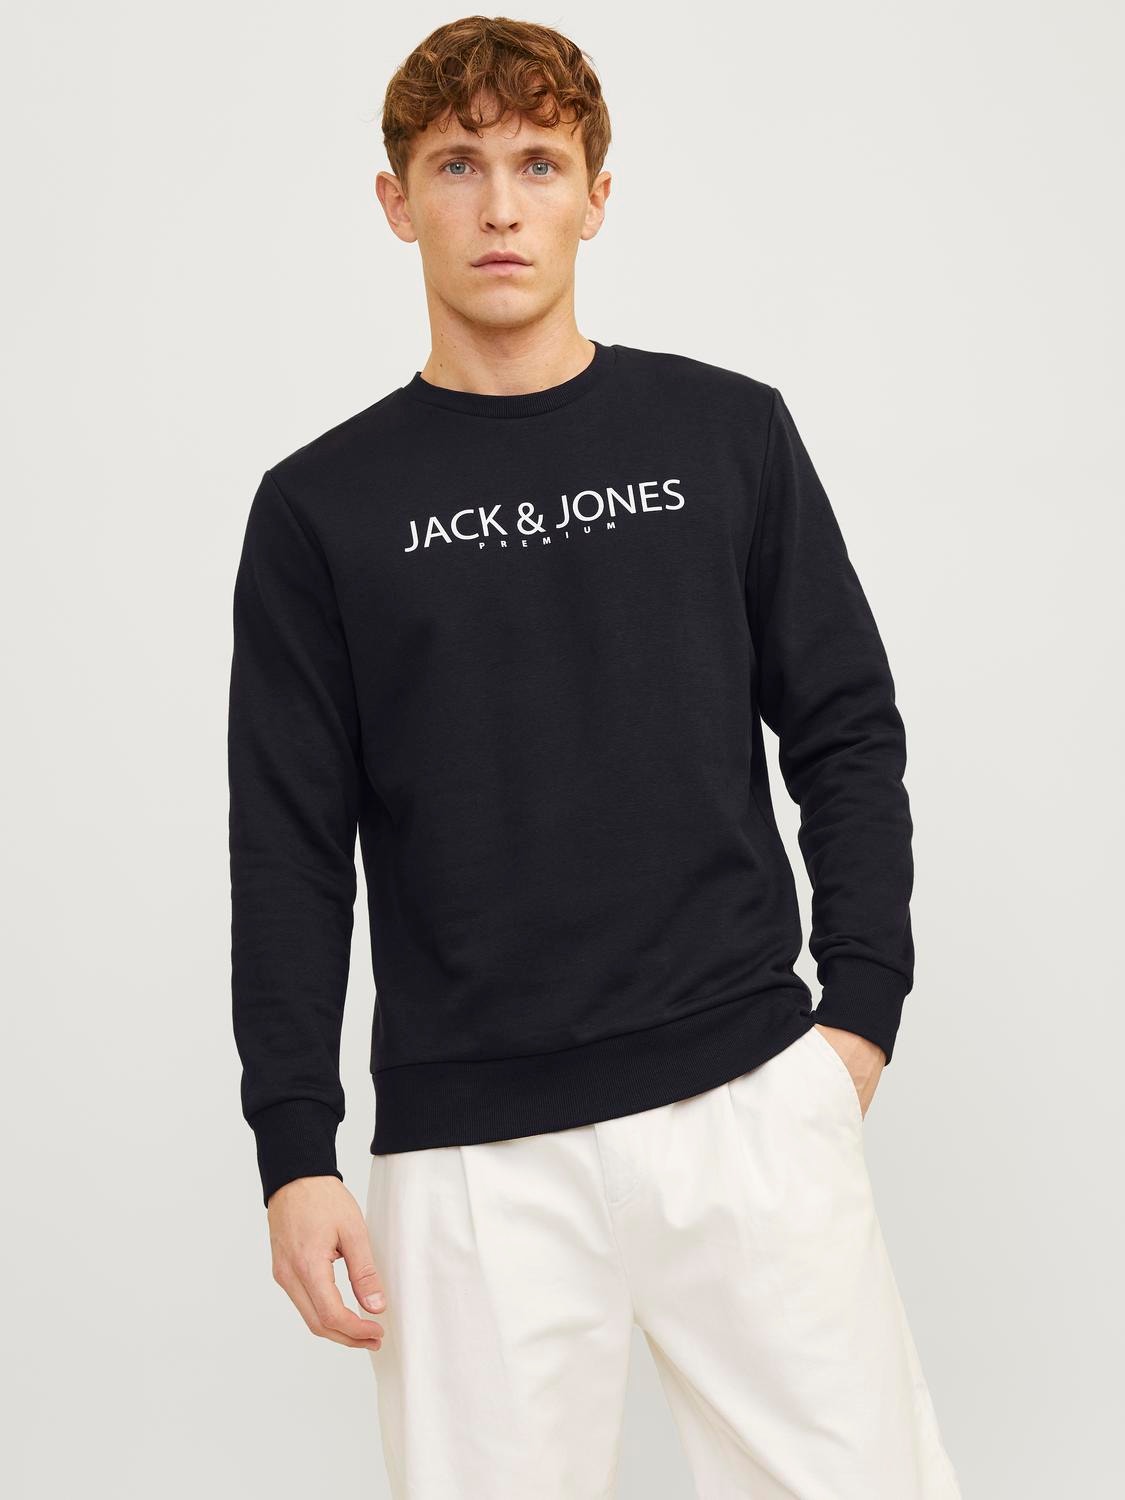 Jack & Jones Printed Crewn Neck Sweatshirt -Black Onyx - 12256972